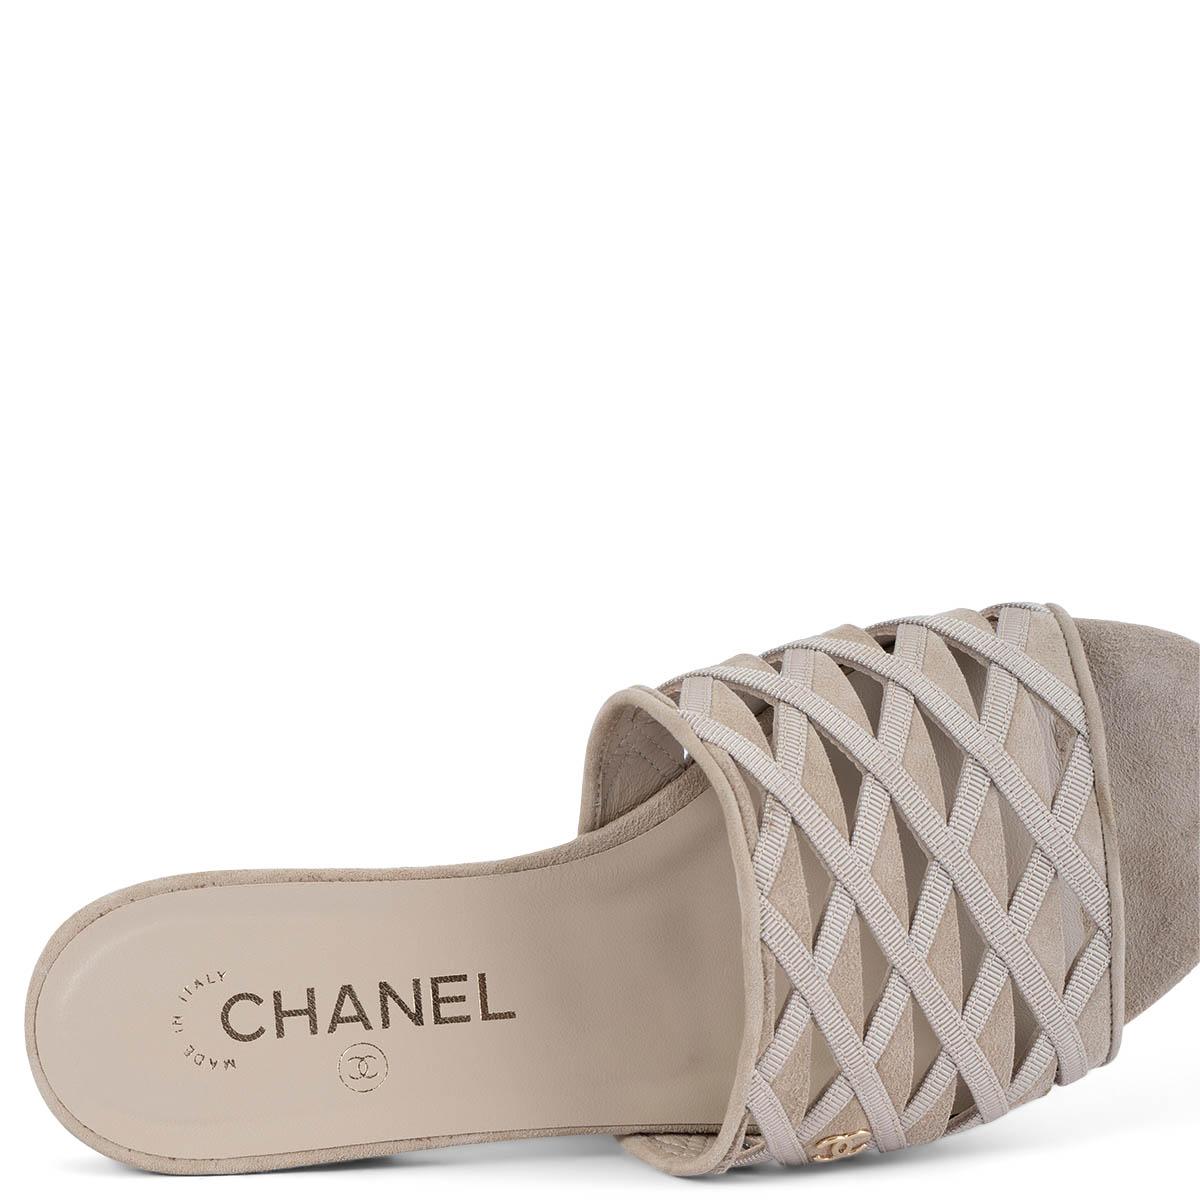 CHANEL nude suede & grosgrain 2020 SLIDE Sandals Shoes 37 For Sale 3